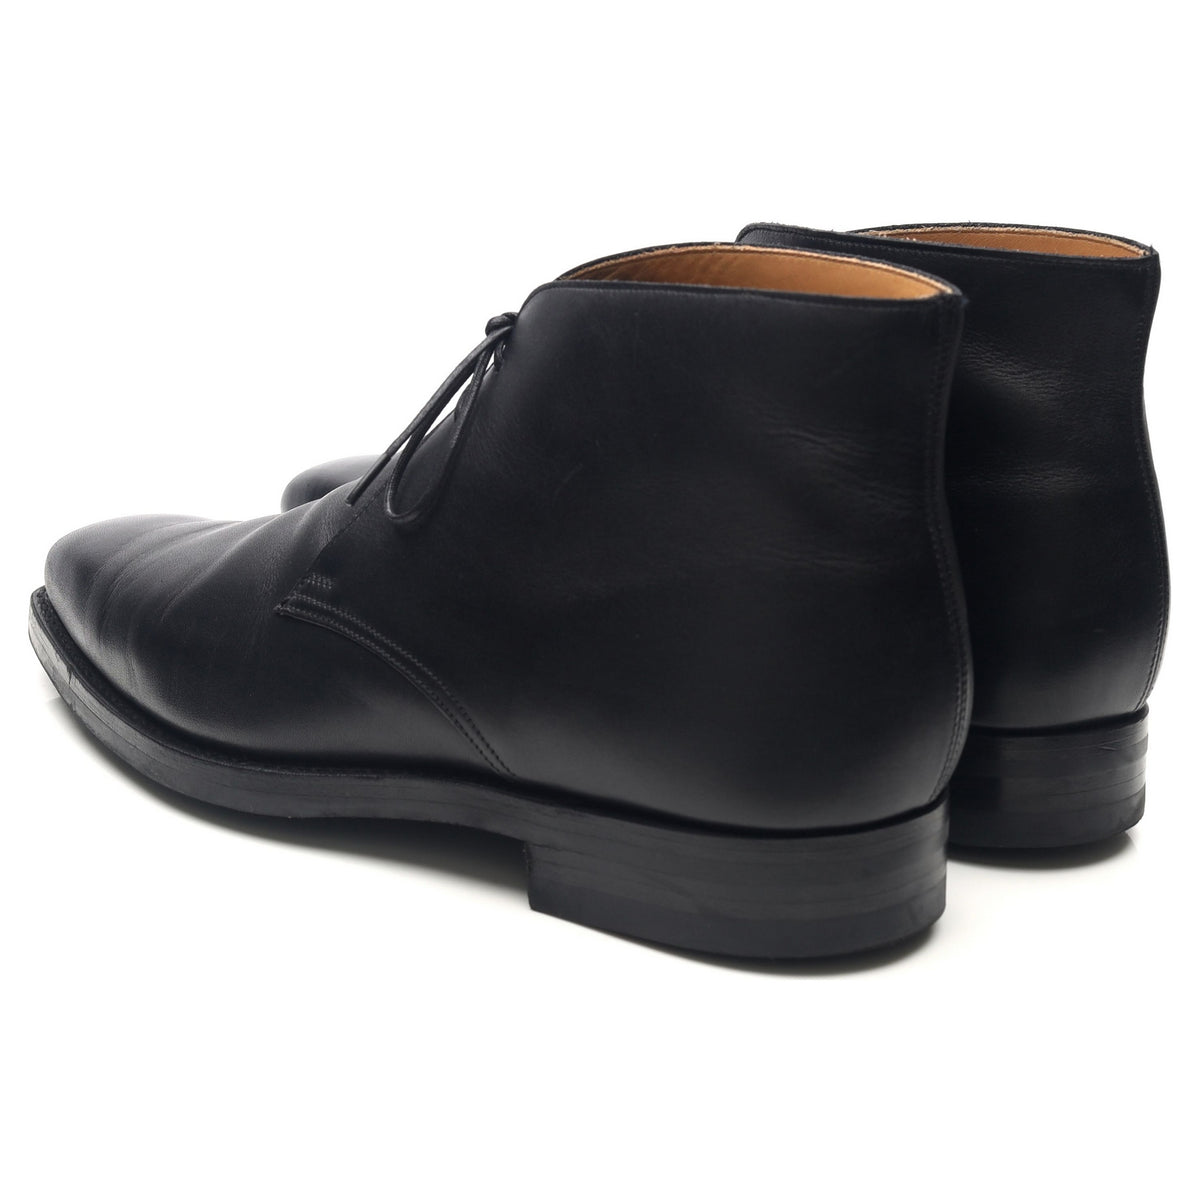 &#39;Tetbury&#39; Black Leather Chukka Boots UK 10 E